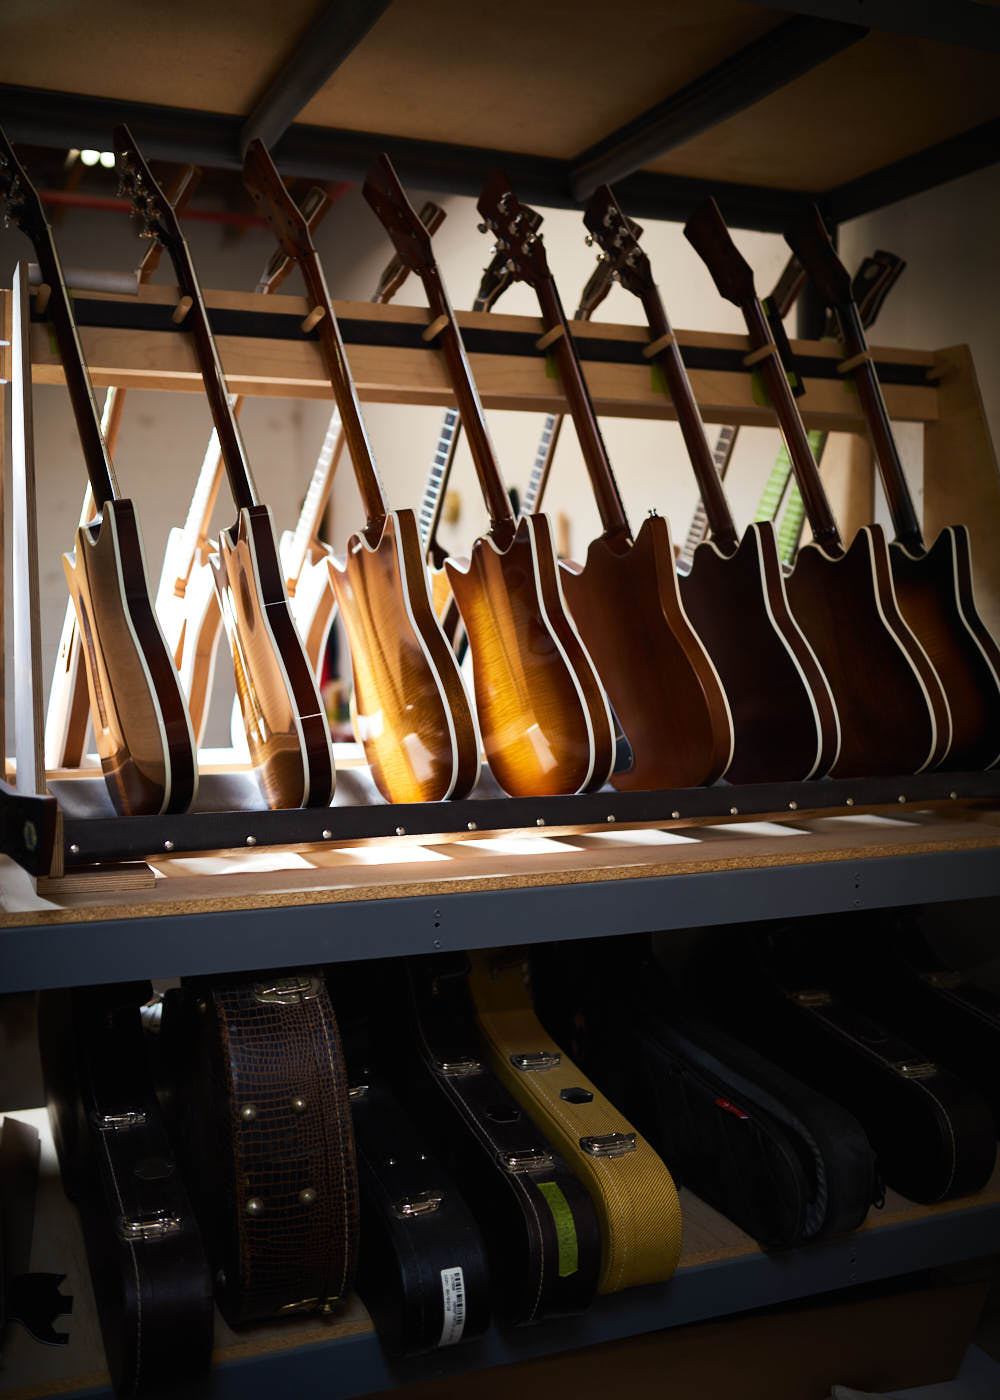 Toronto guitars on display in small business studio